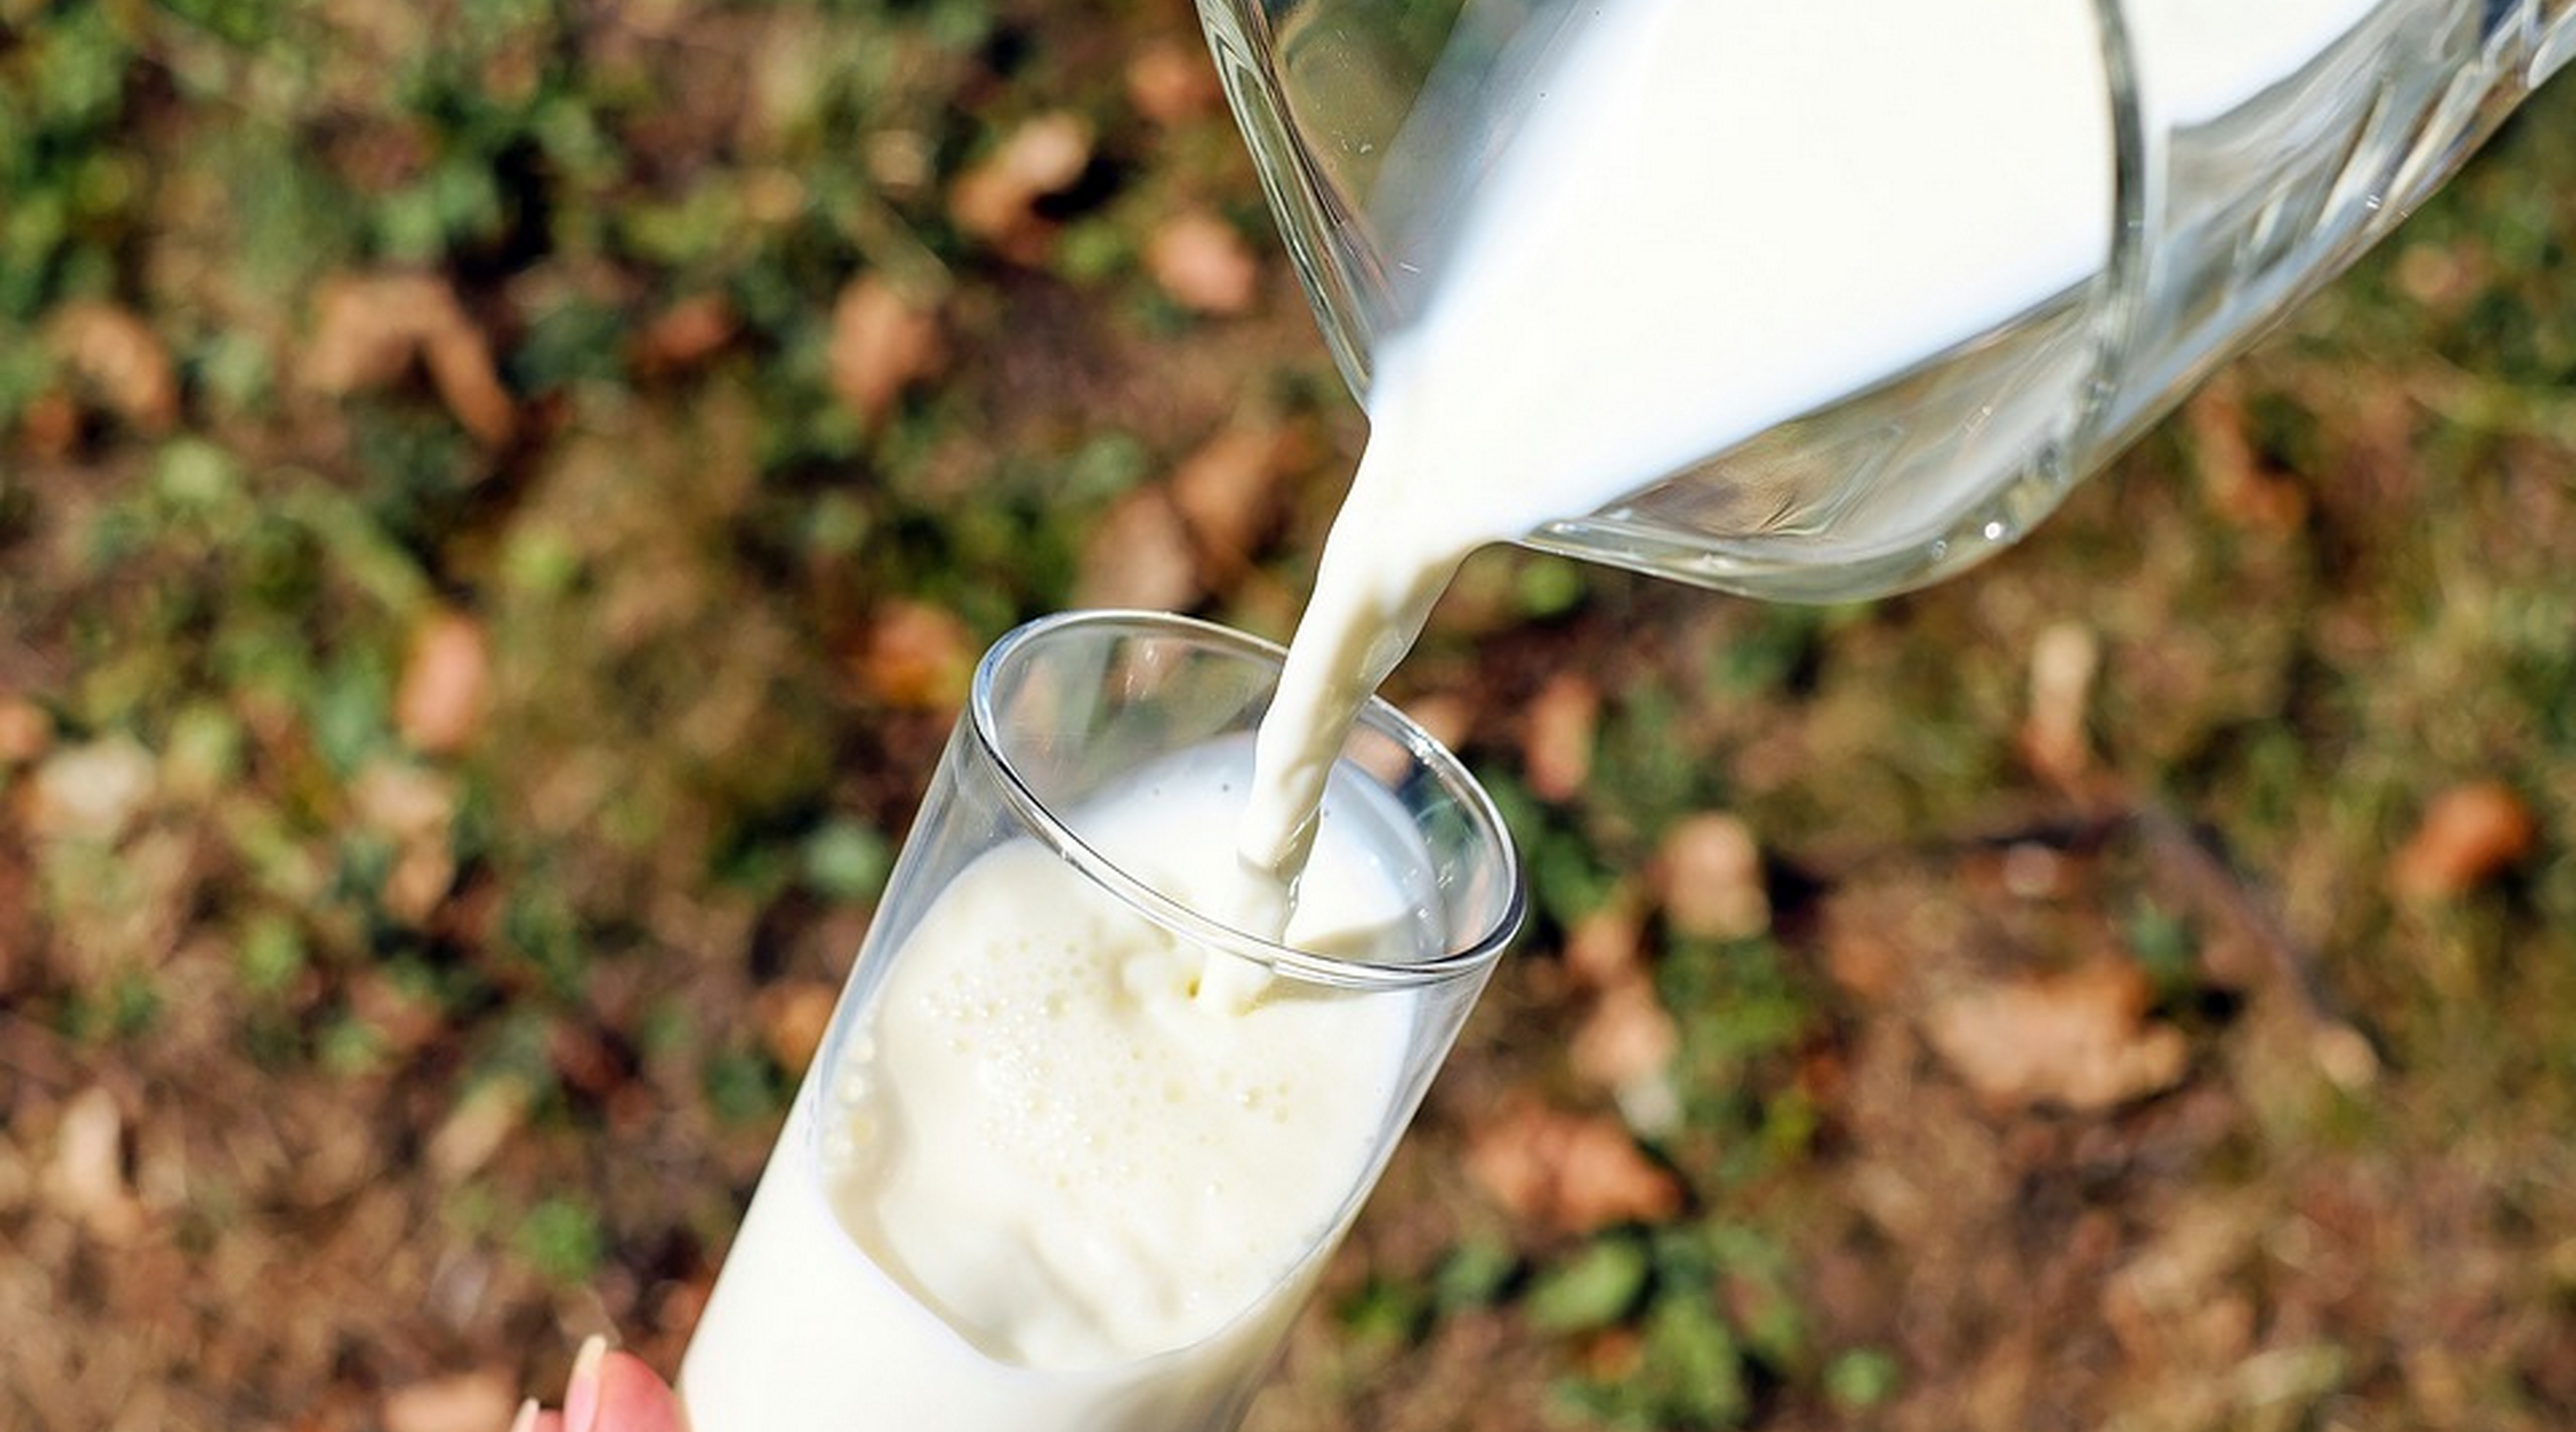 Minsal emite Alerta Alimentaria por bacteria en dos marcas de leche